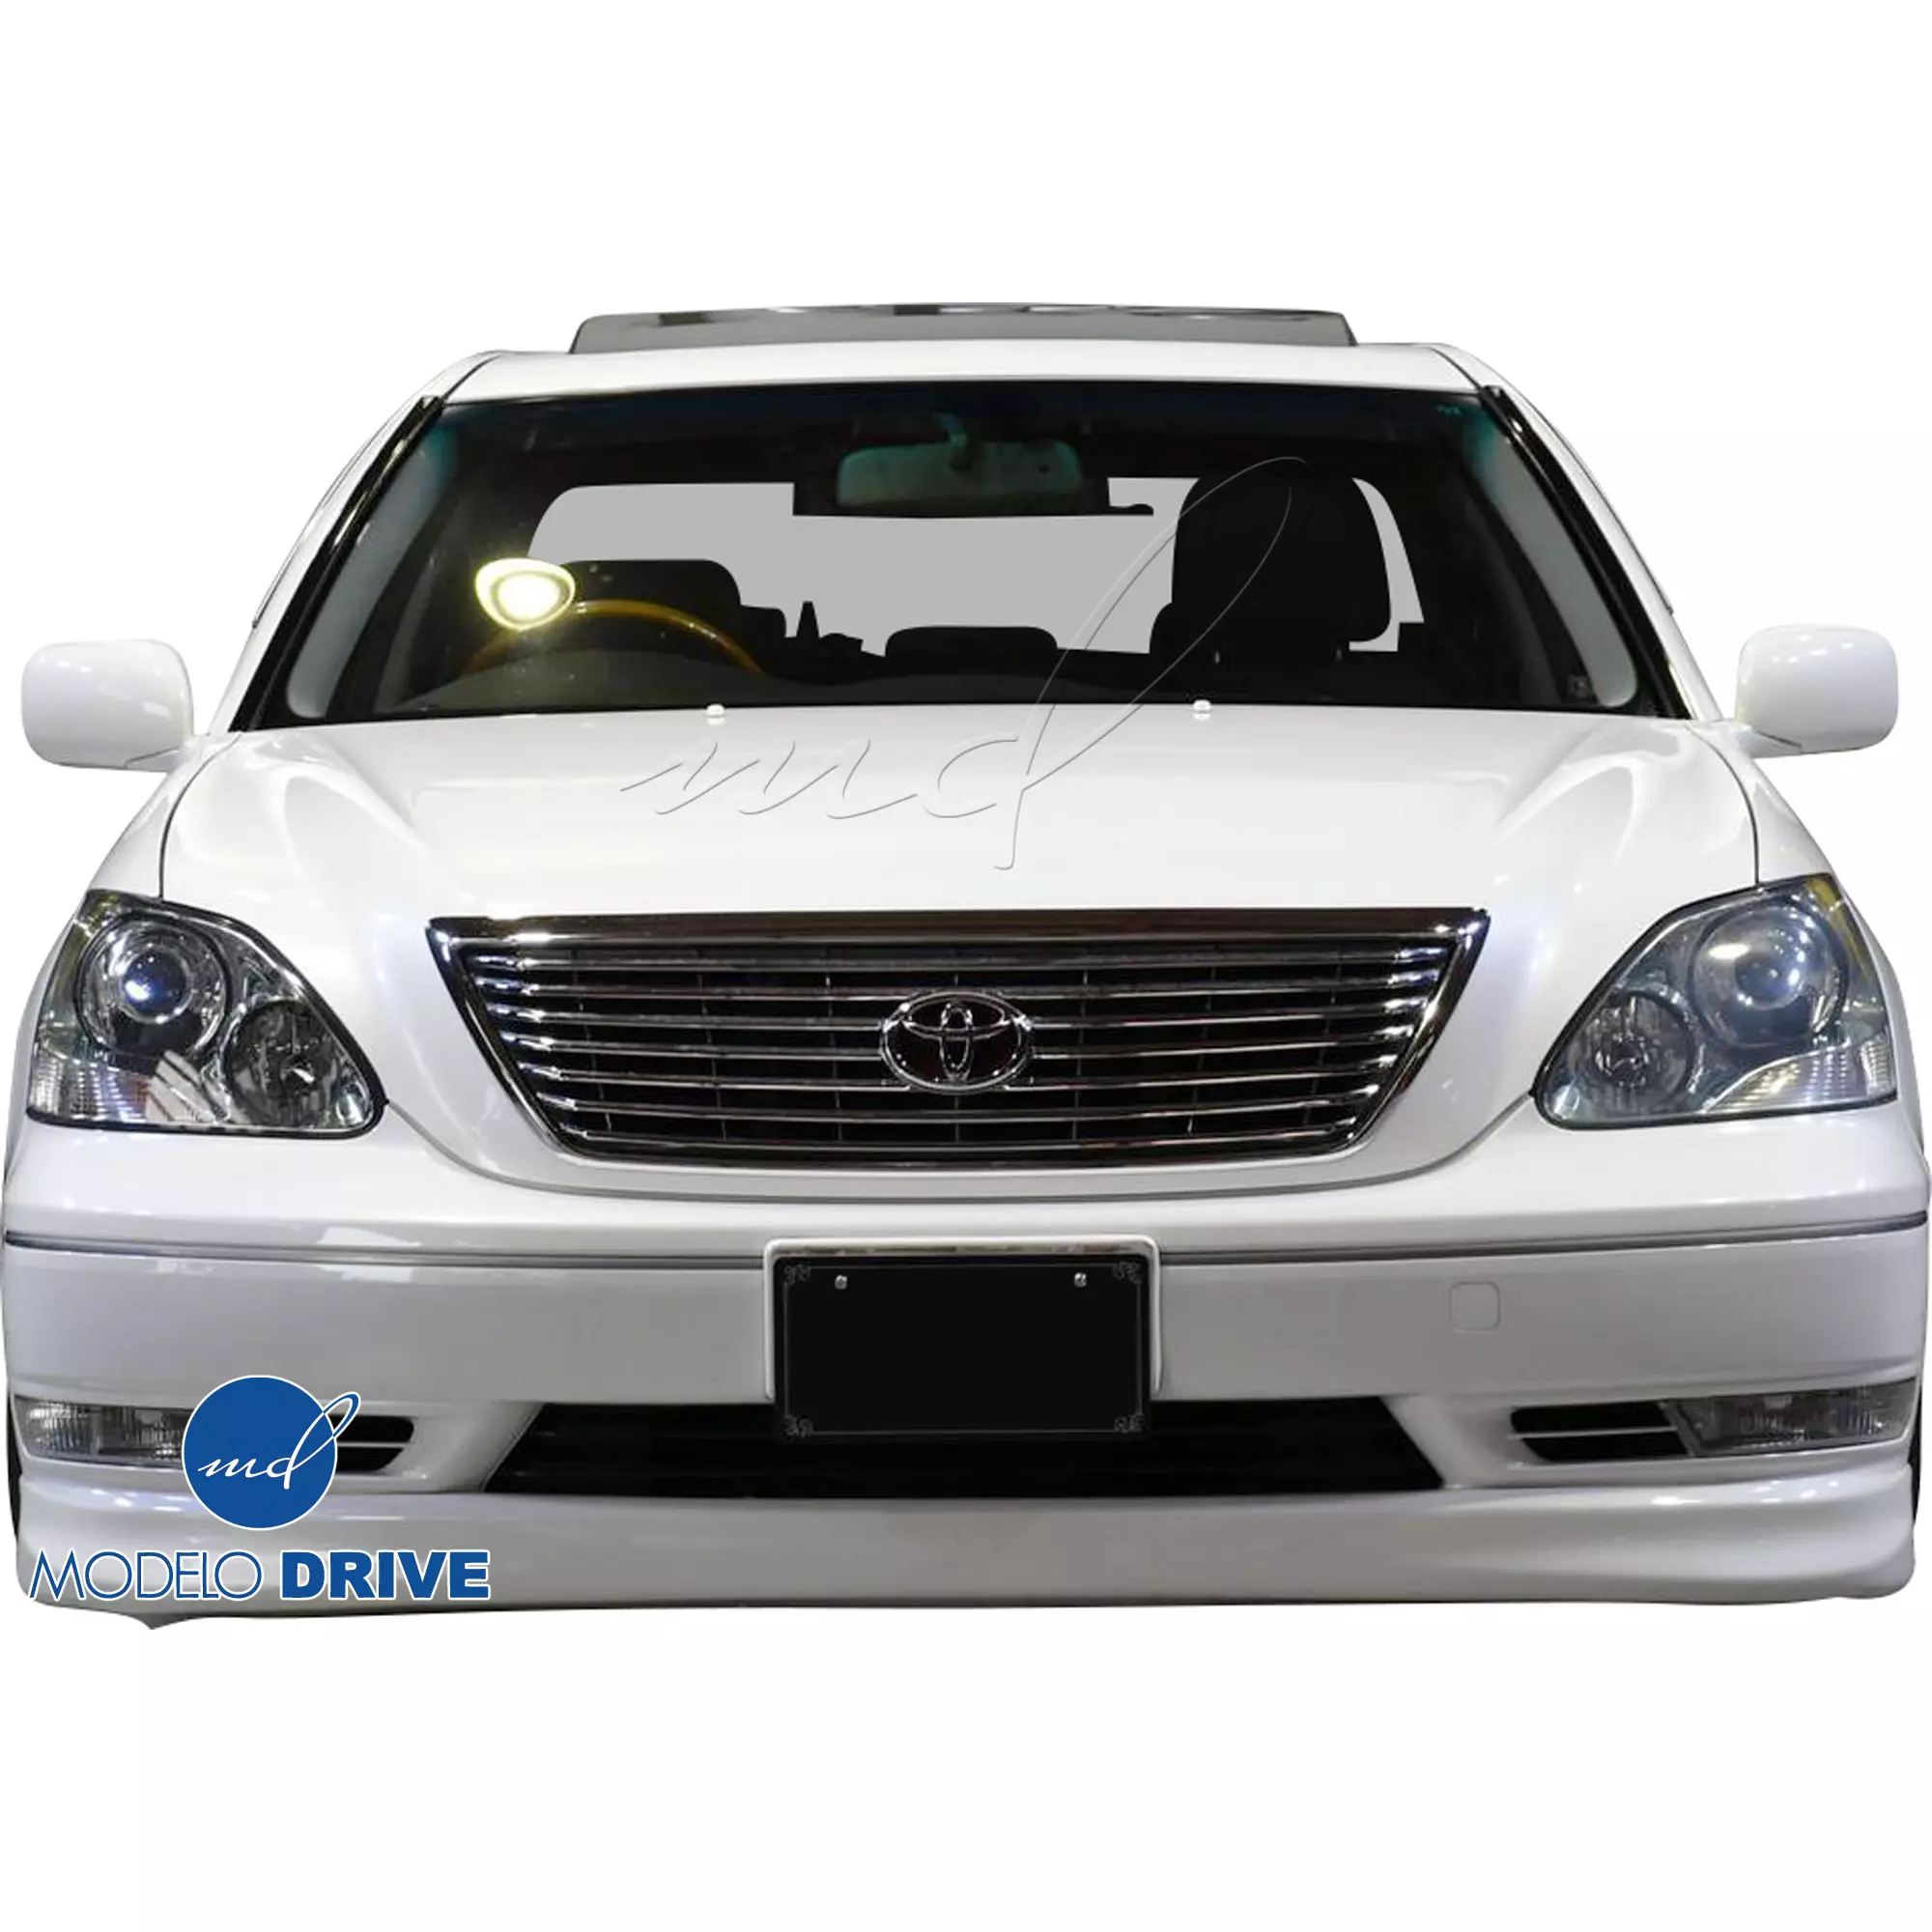 ModeloDrive FRP ARTI Body Kit 4pc (short wheelbase) > Lexus LS Series LS430 UCF31 2004-2006 - Image 11